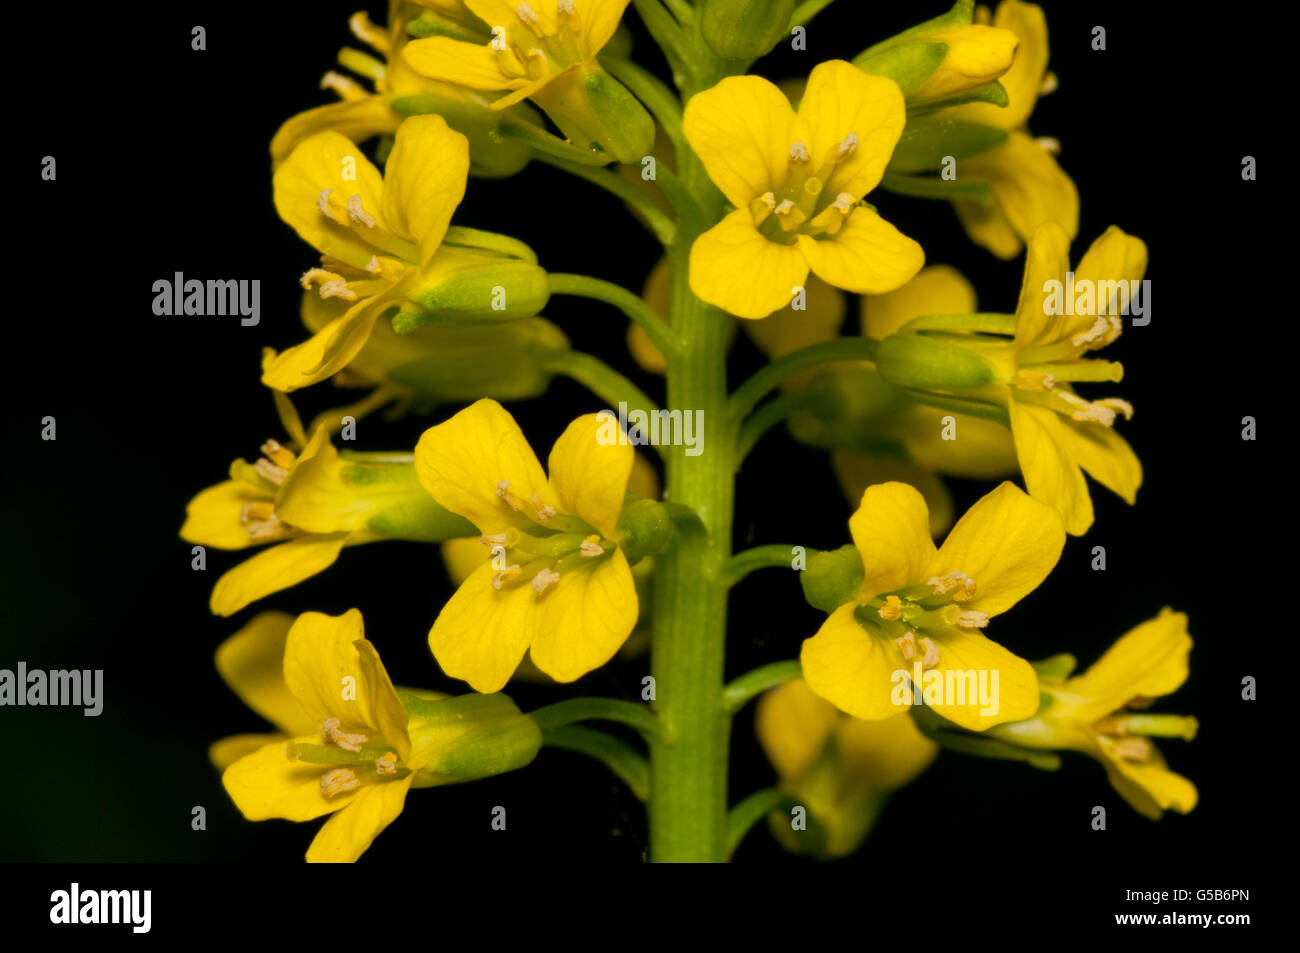 Nahaufnahme Makro einer Knoblauchsrauke Unkraut Blume. Stockfoto